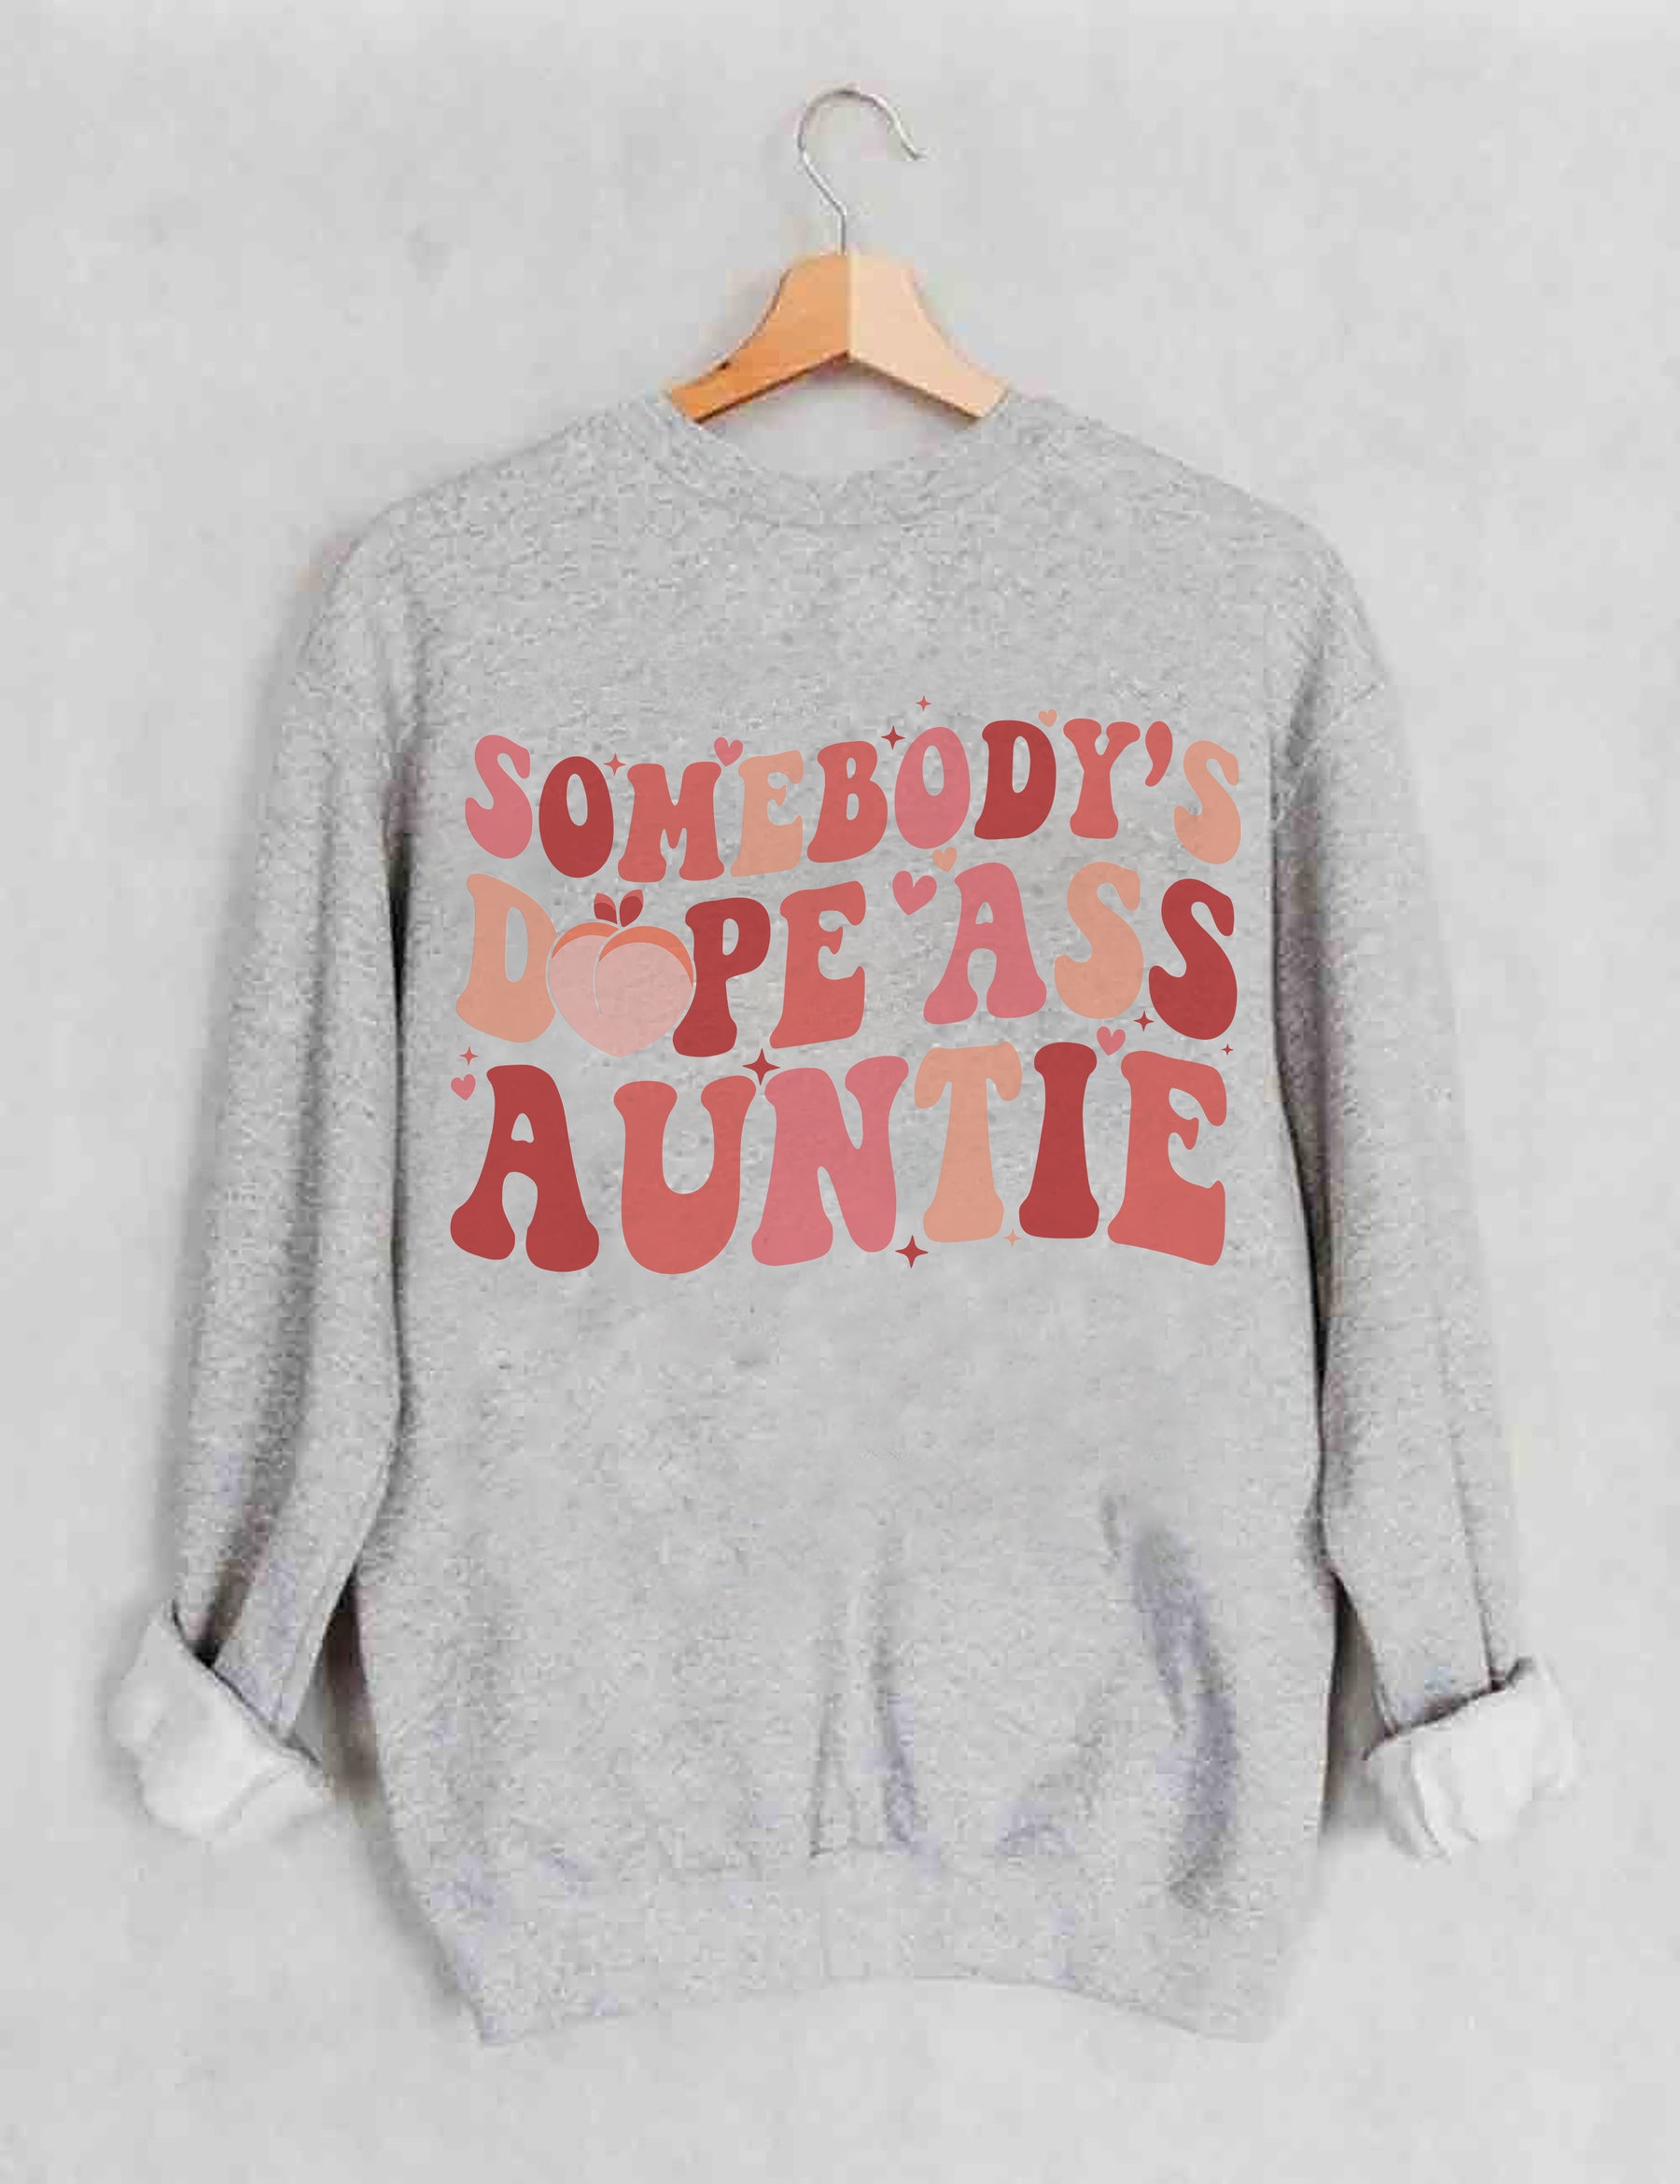 Somebody's Dope Ass Auntie Sweatshirt